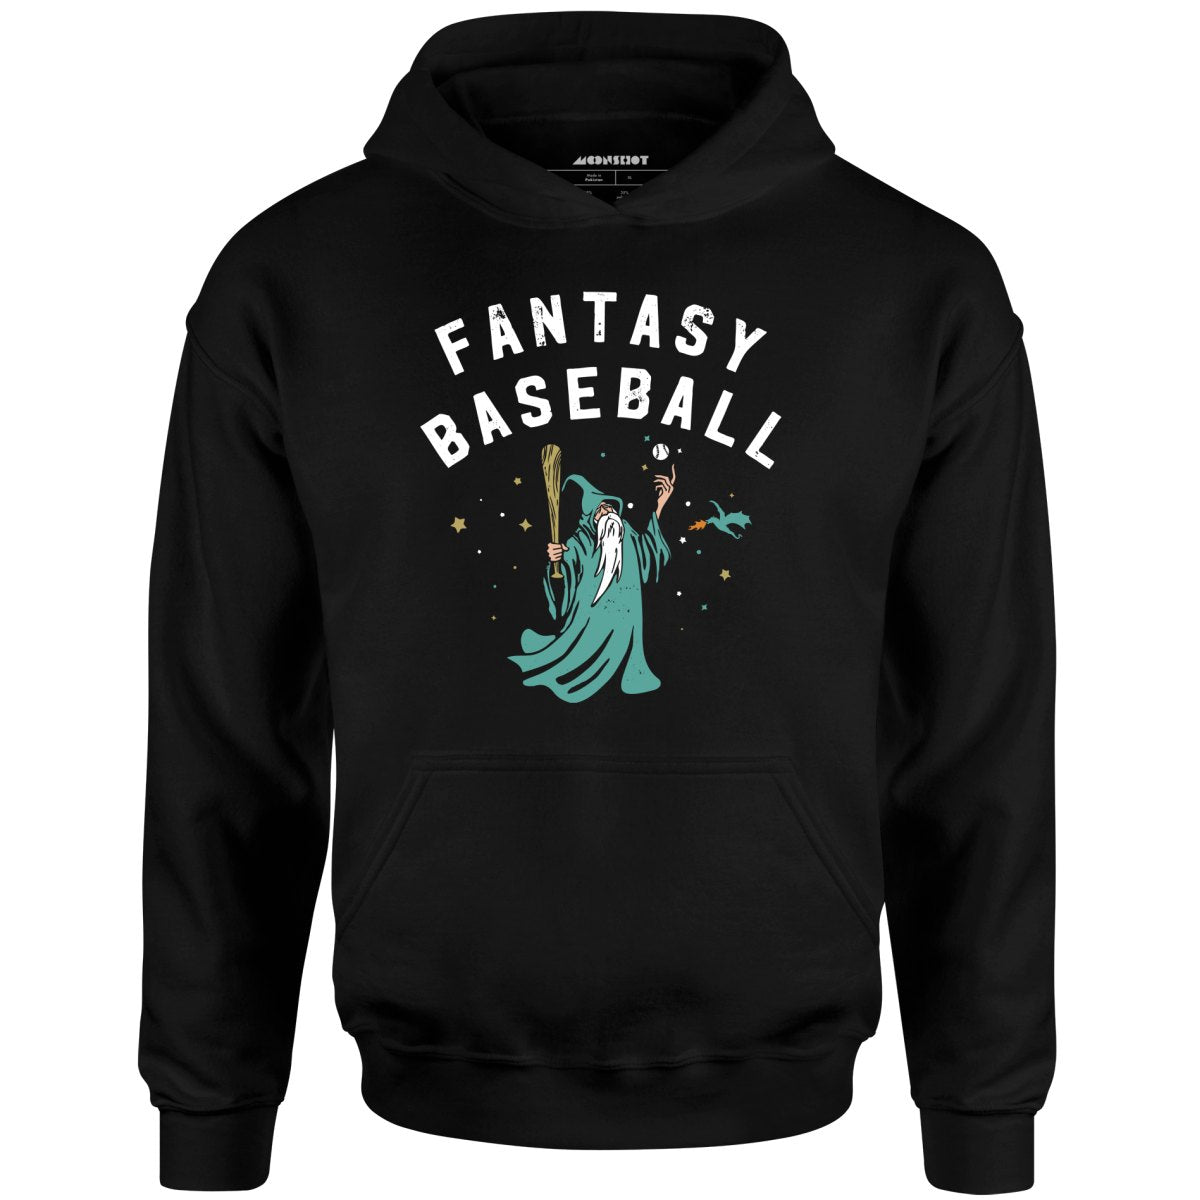 Fantasy Baseball - Unisex Hoodie